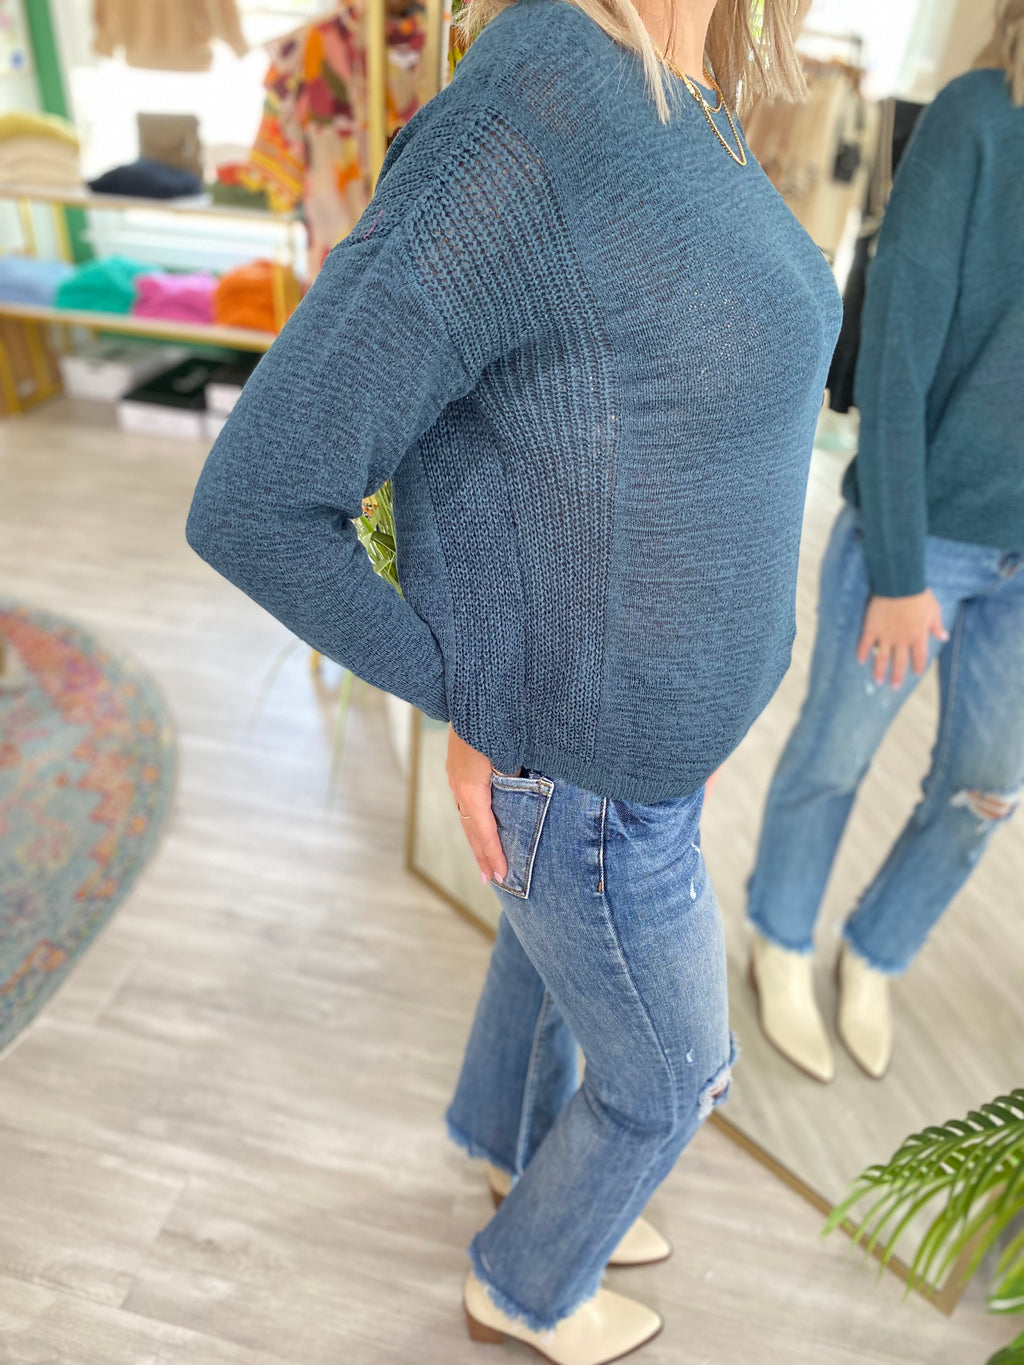 The Lana Lightweight Sweater